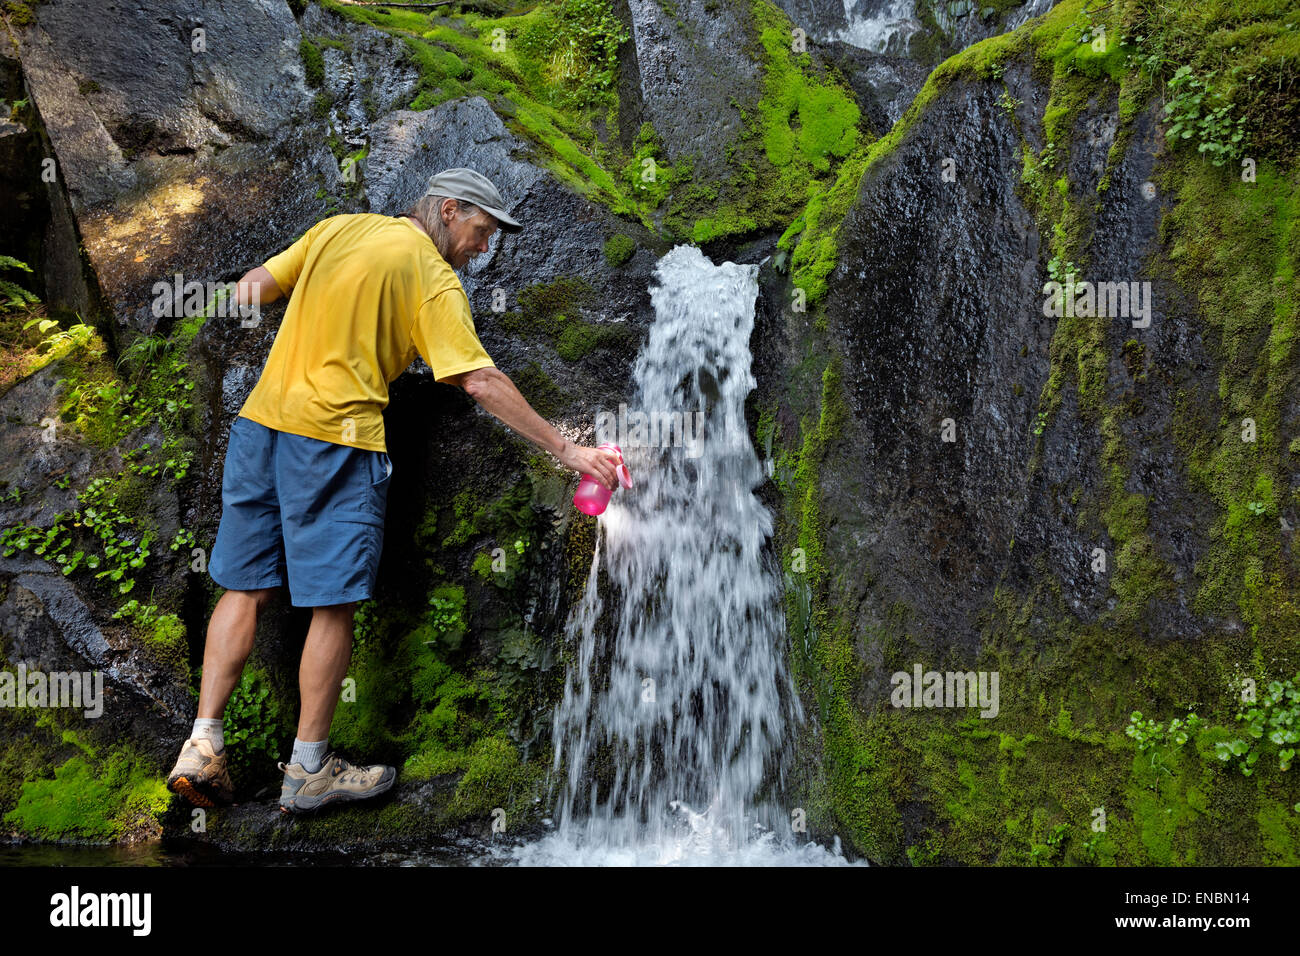 WASHINGTON - Hiker filling water bottle along the Wonderland Trail below Moraine Park in Mount Rainier National Park. Stock Photo